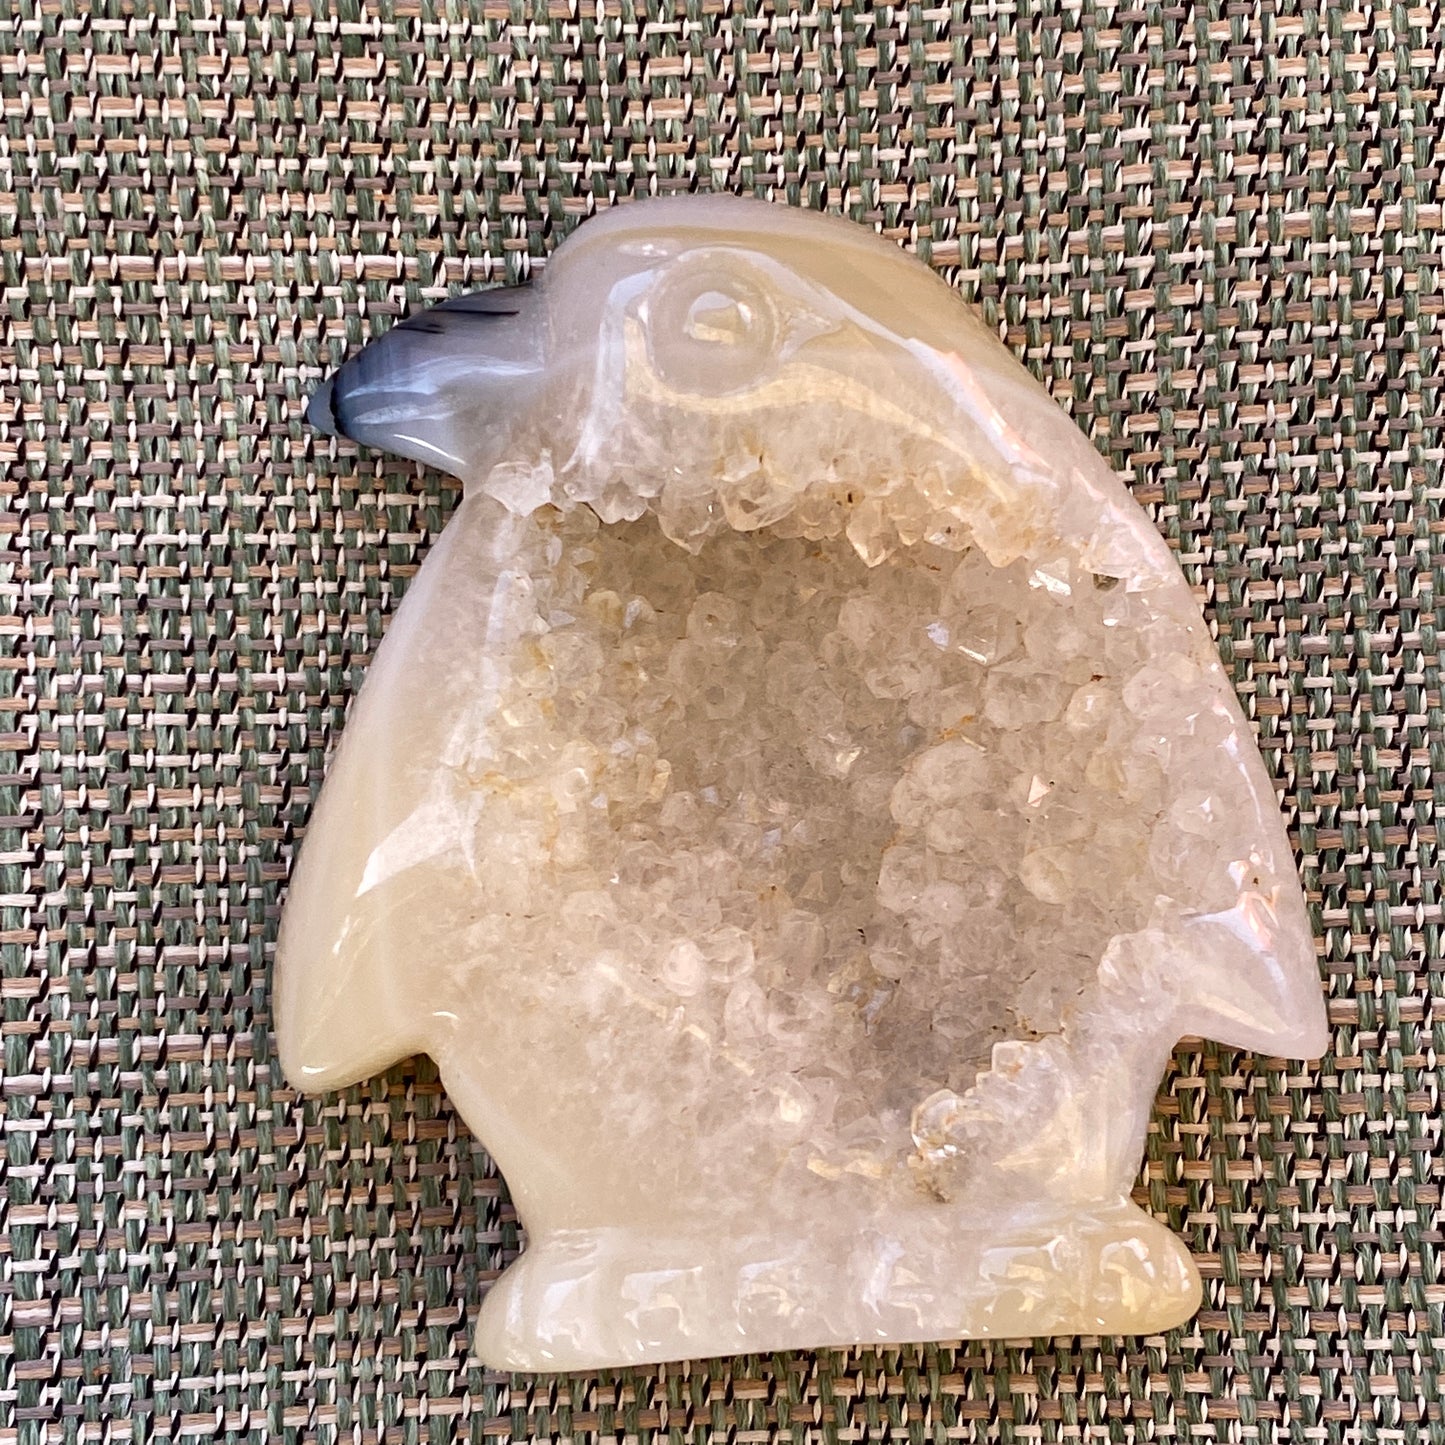 Agate Geode Gemstone shaped Penguins